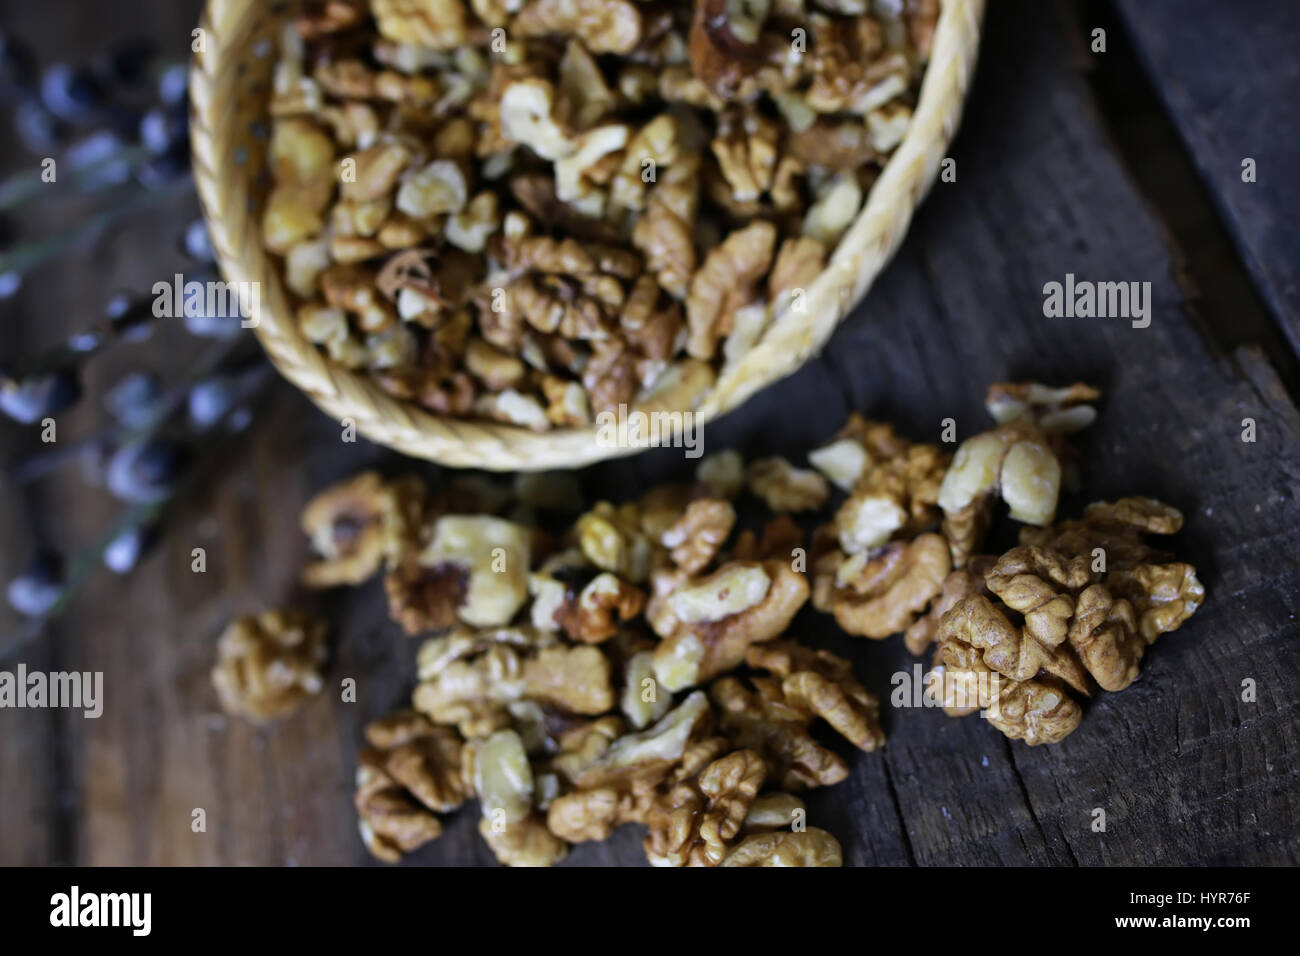 peeled walnut on a wooden background Stock Photo